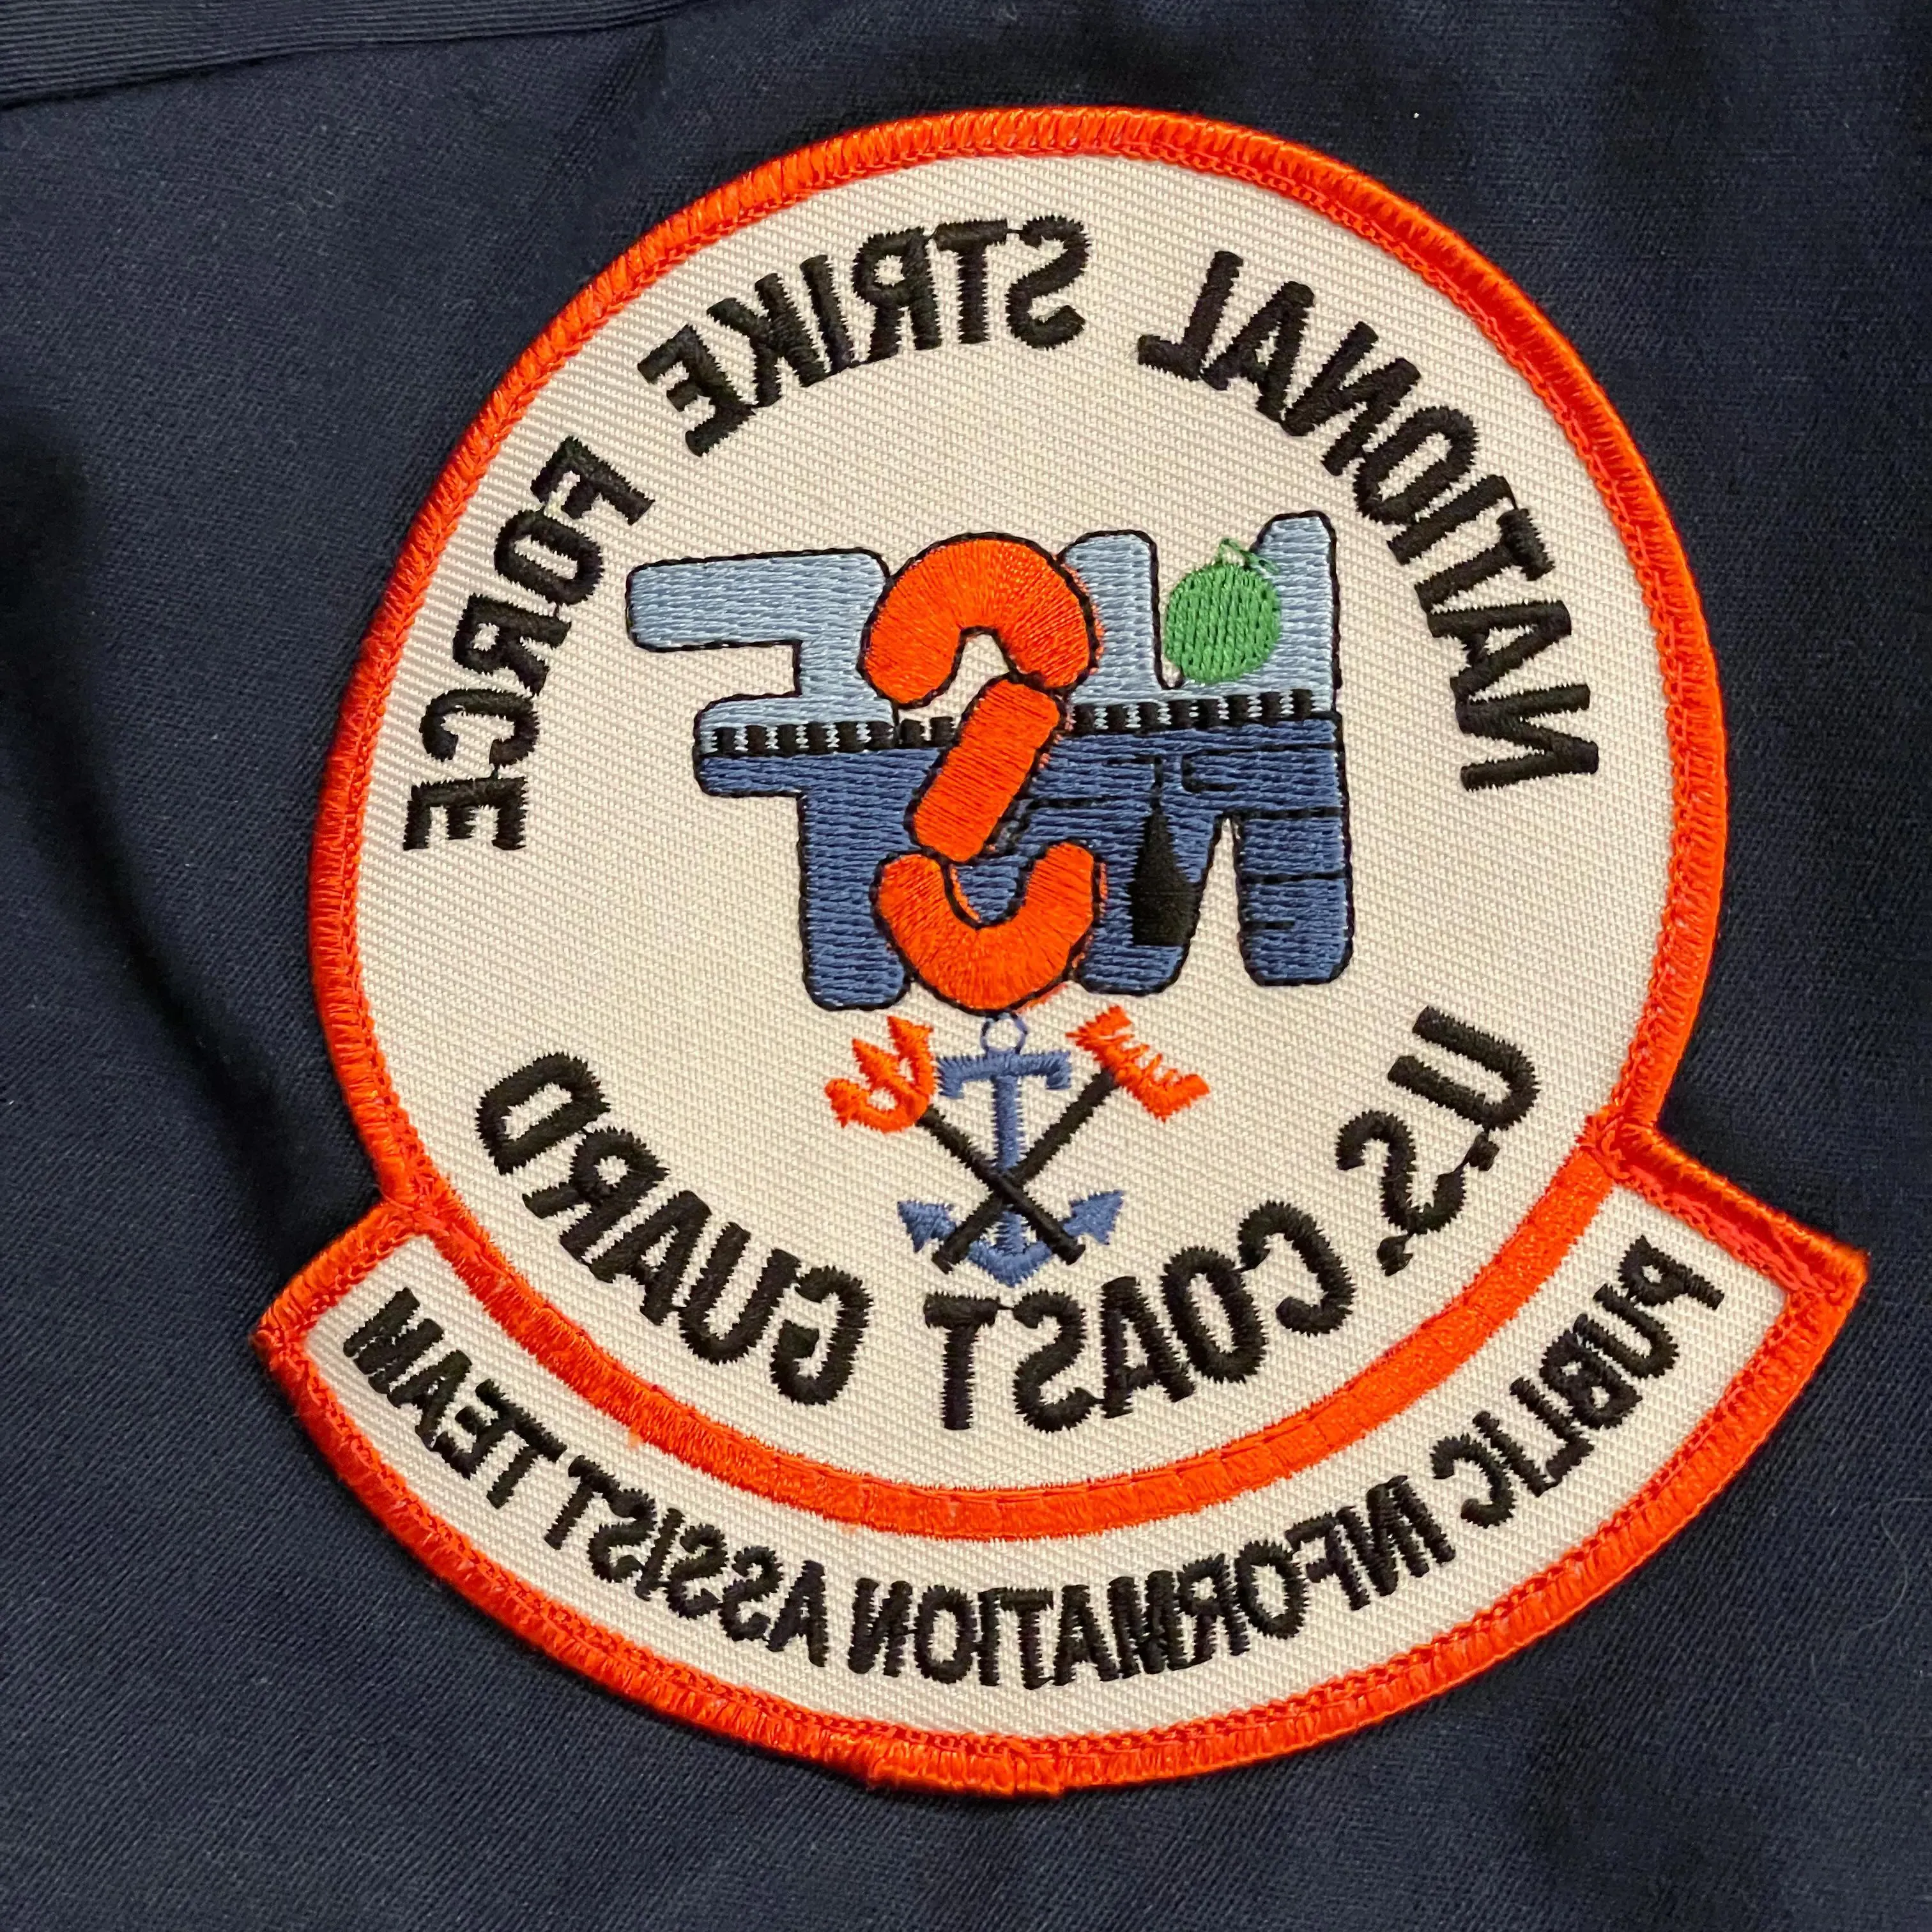 badge for uniform that says "National Strike Force U.S. Coast Guard. Public Information Assist Team"